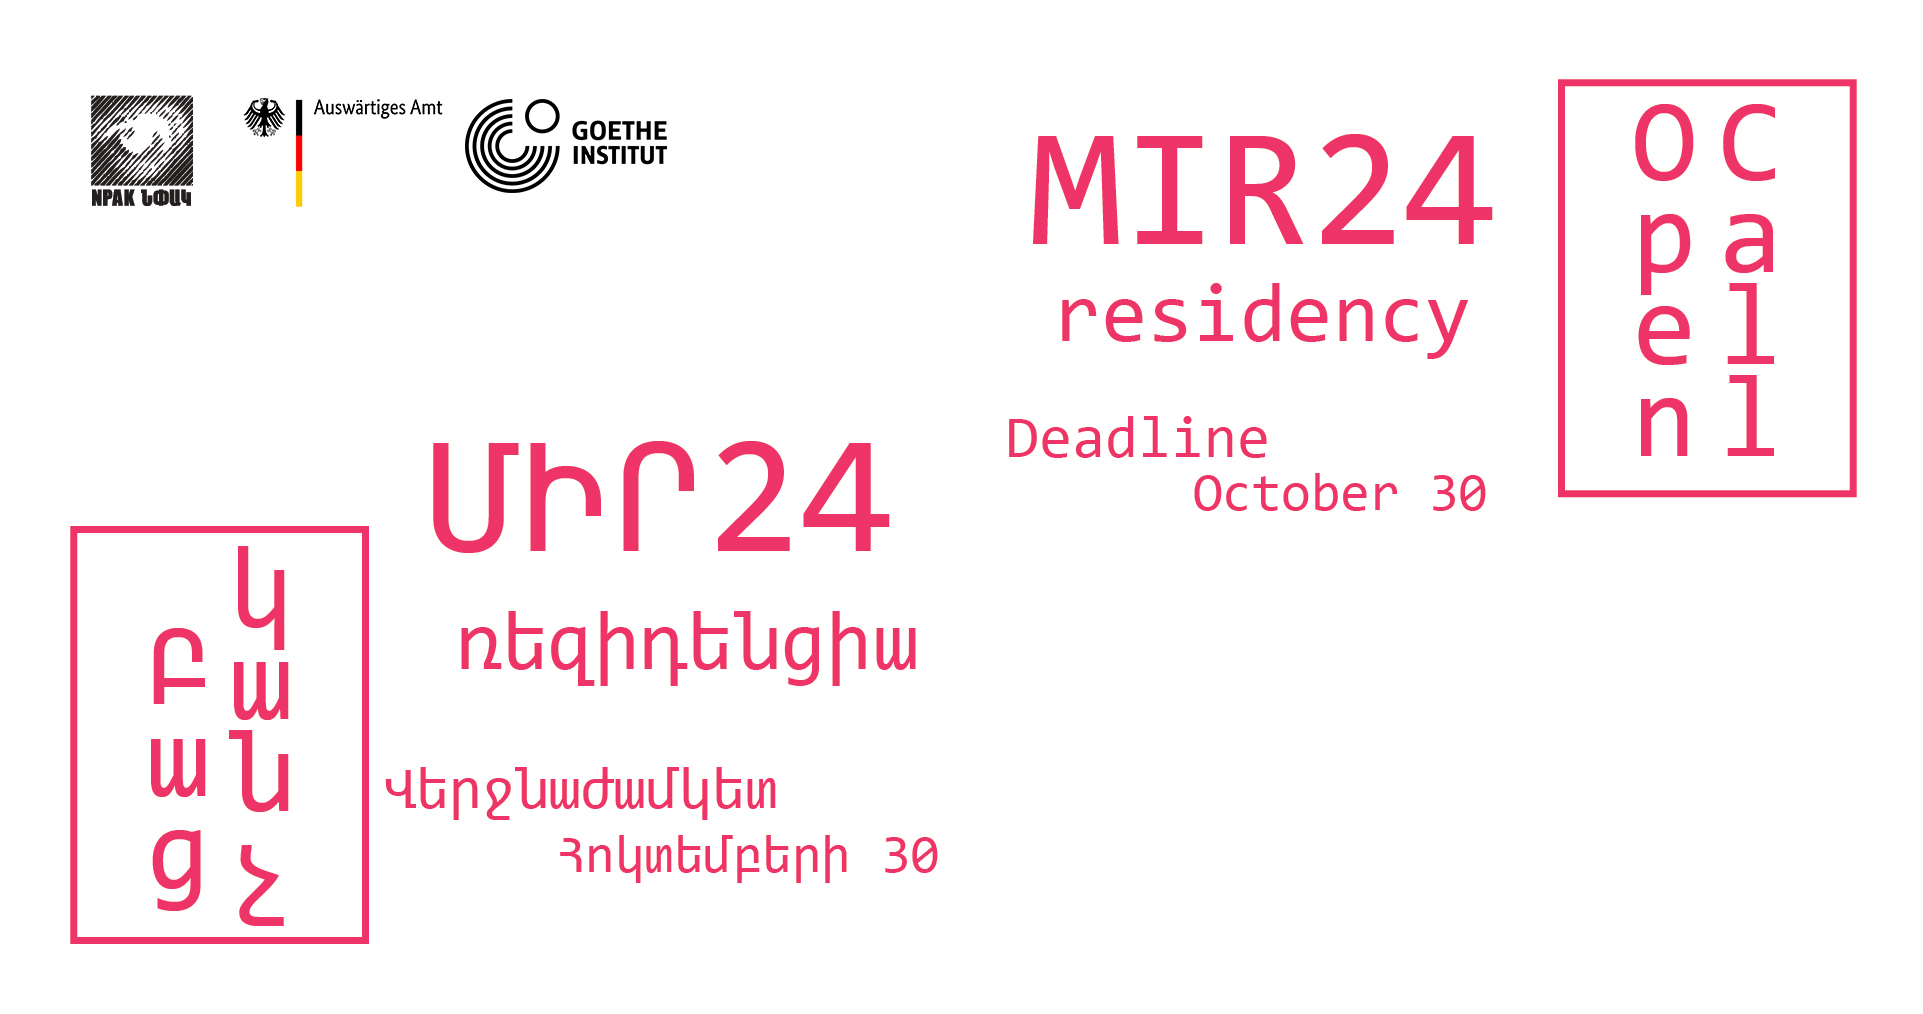 MIR 24. Open Call for residency